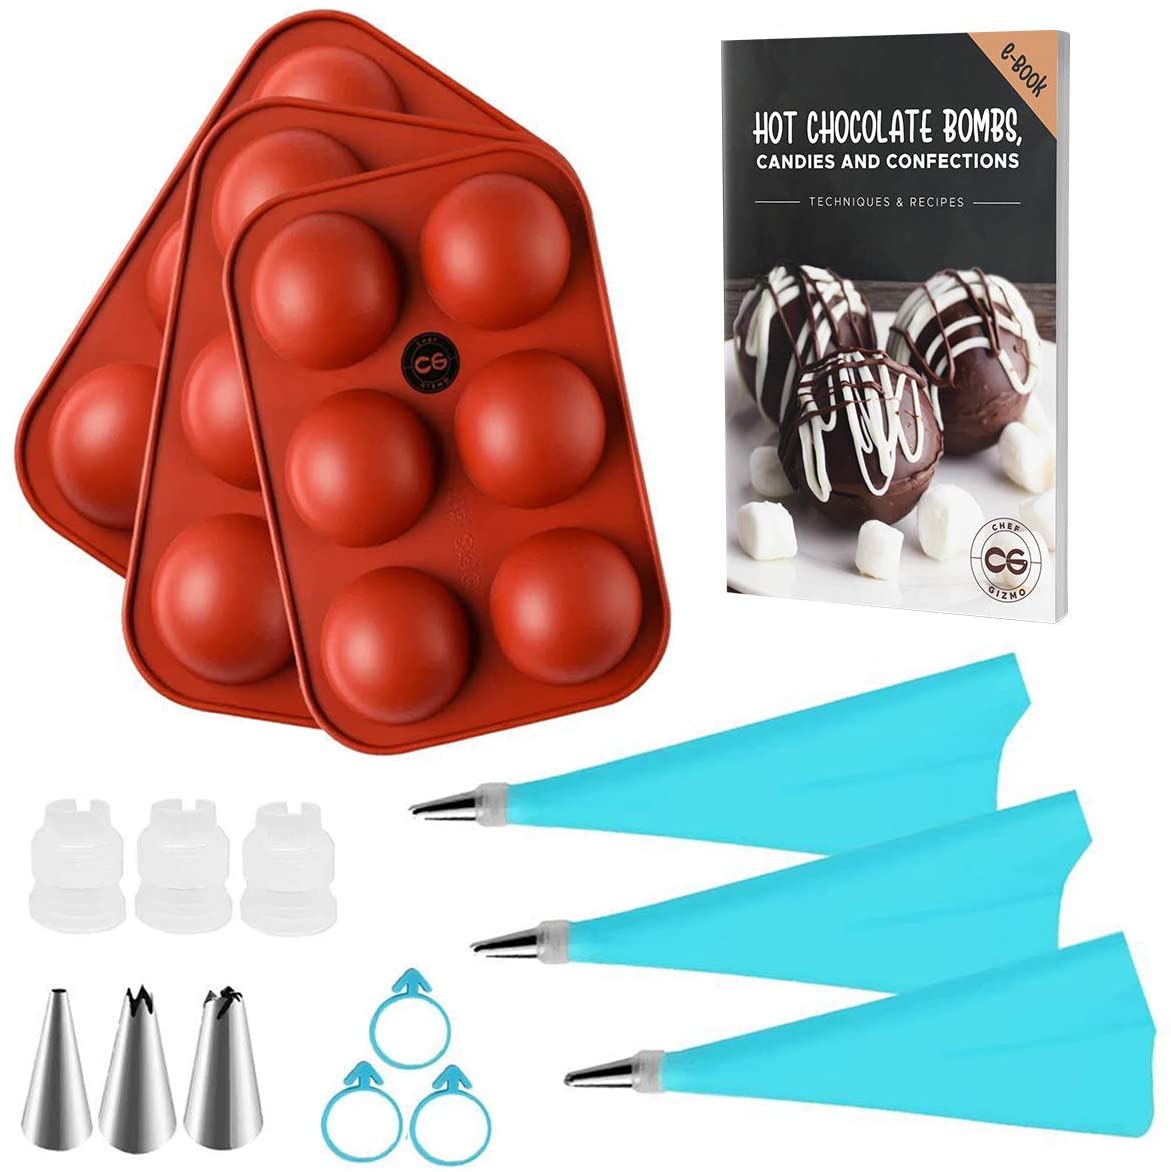 Chocolate Molds Silicone Set - 6 pk + Free Recipes Ebook - Food